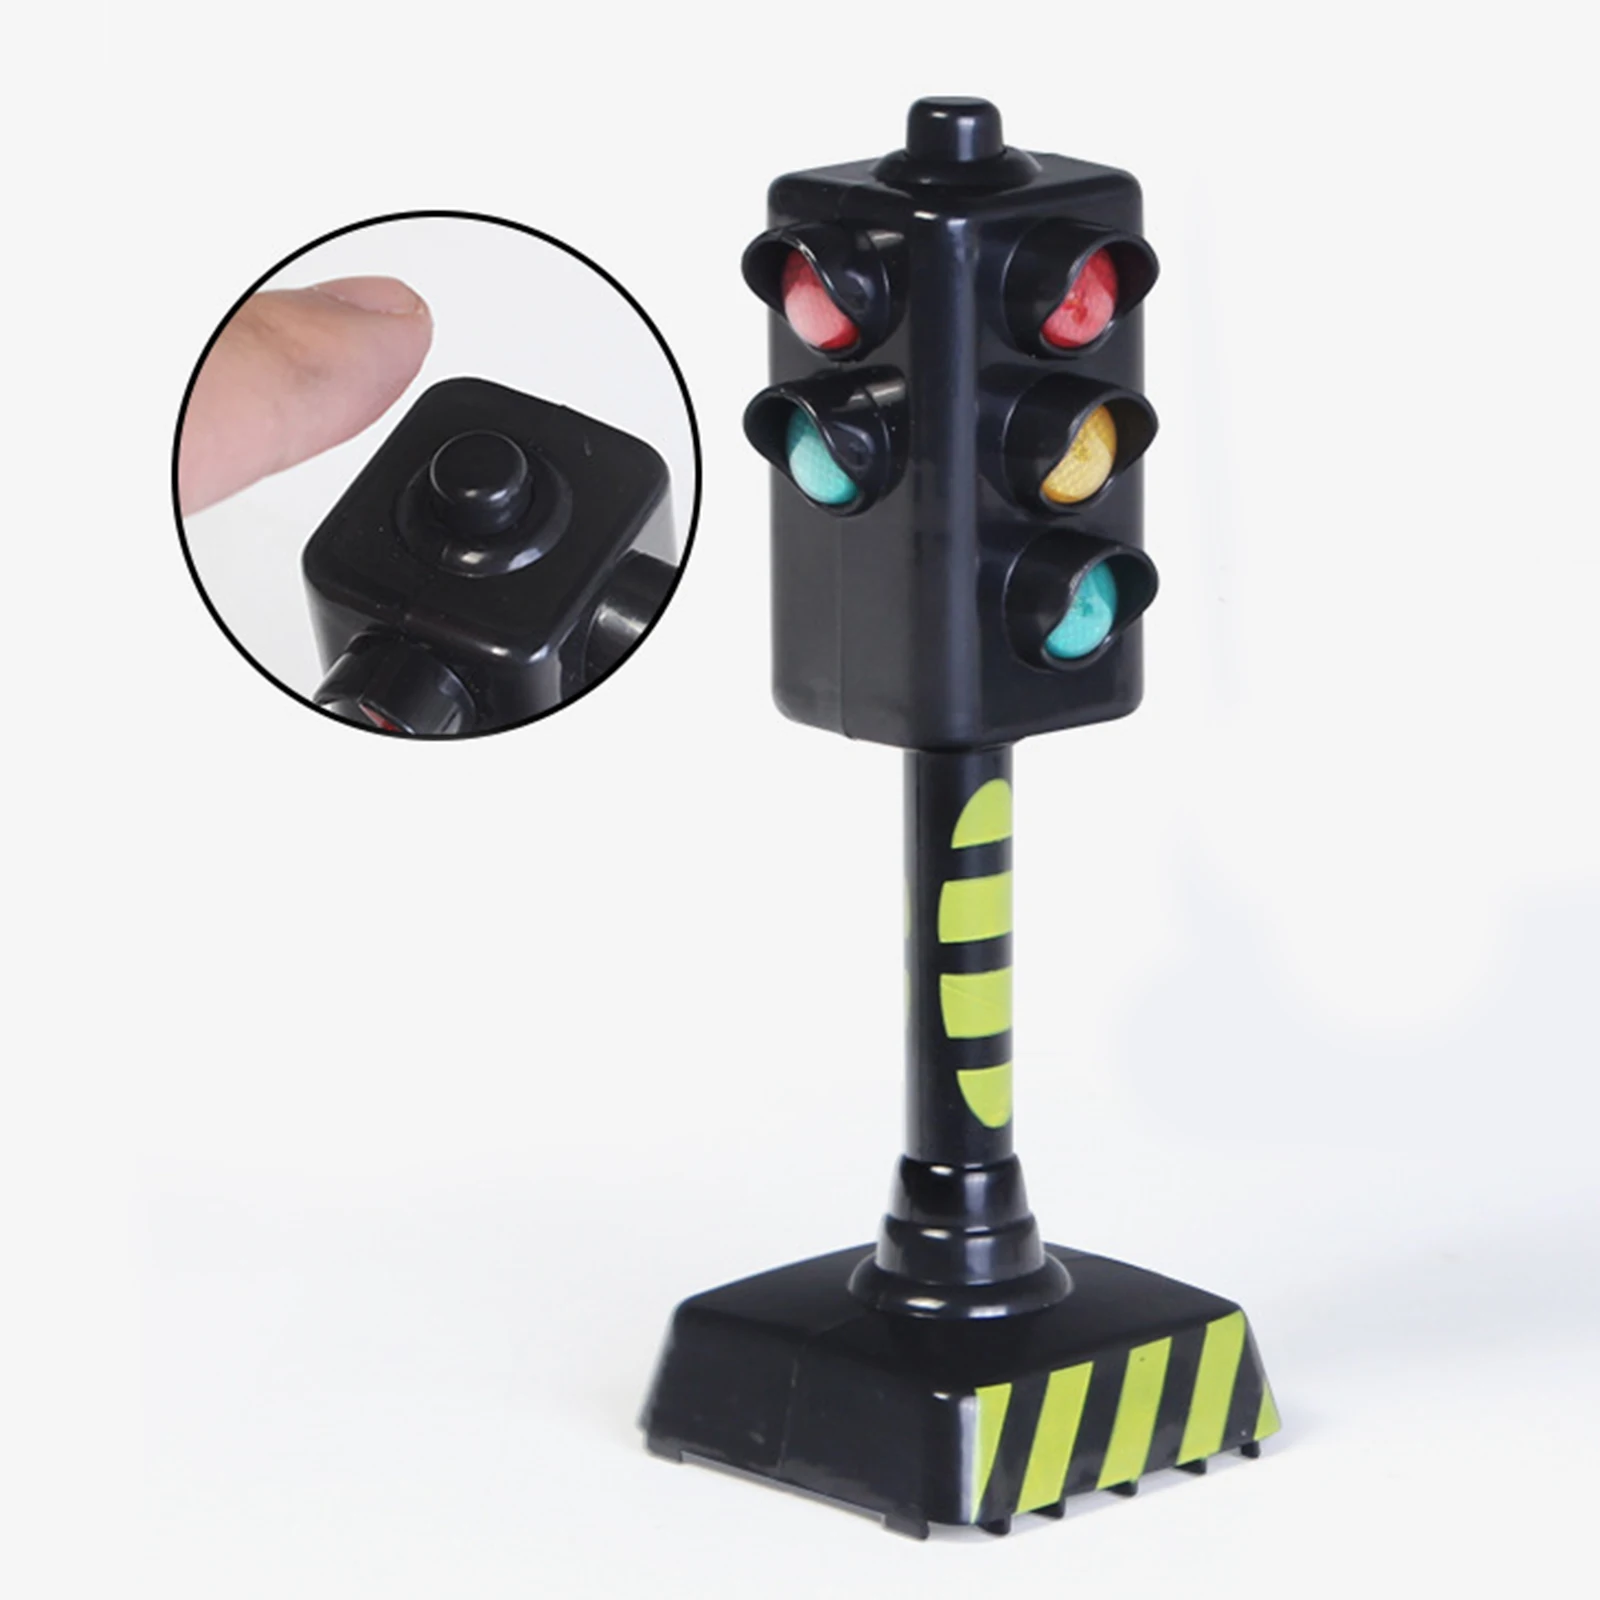 Mini Traffic Light Toy Model Signal Music LED Birthdays Holidays Gift White 